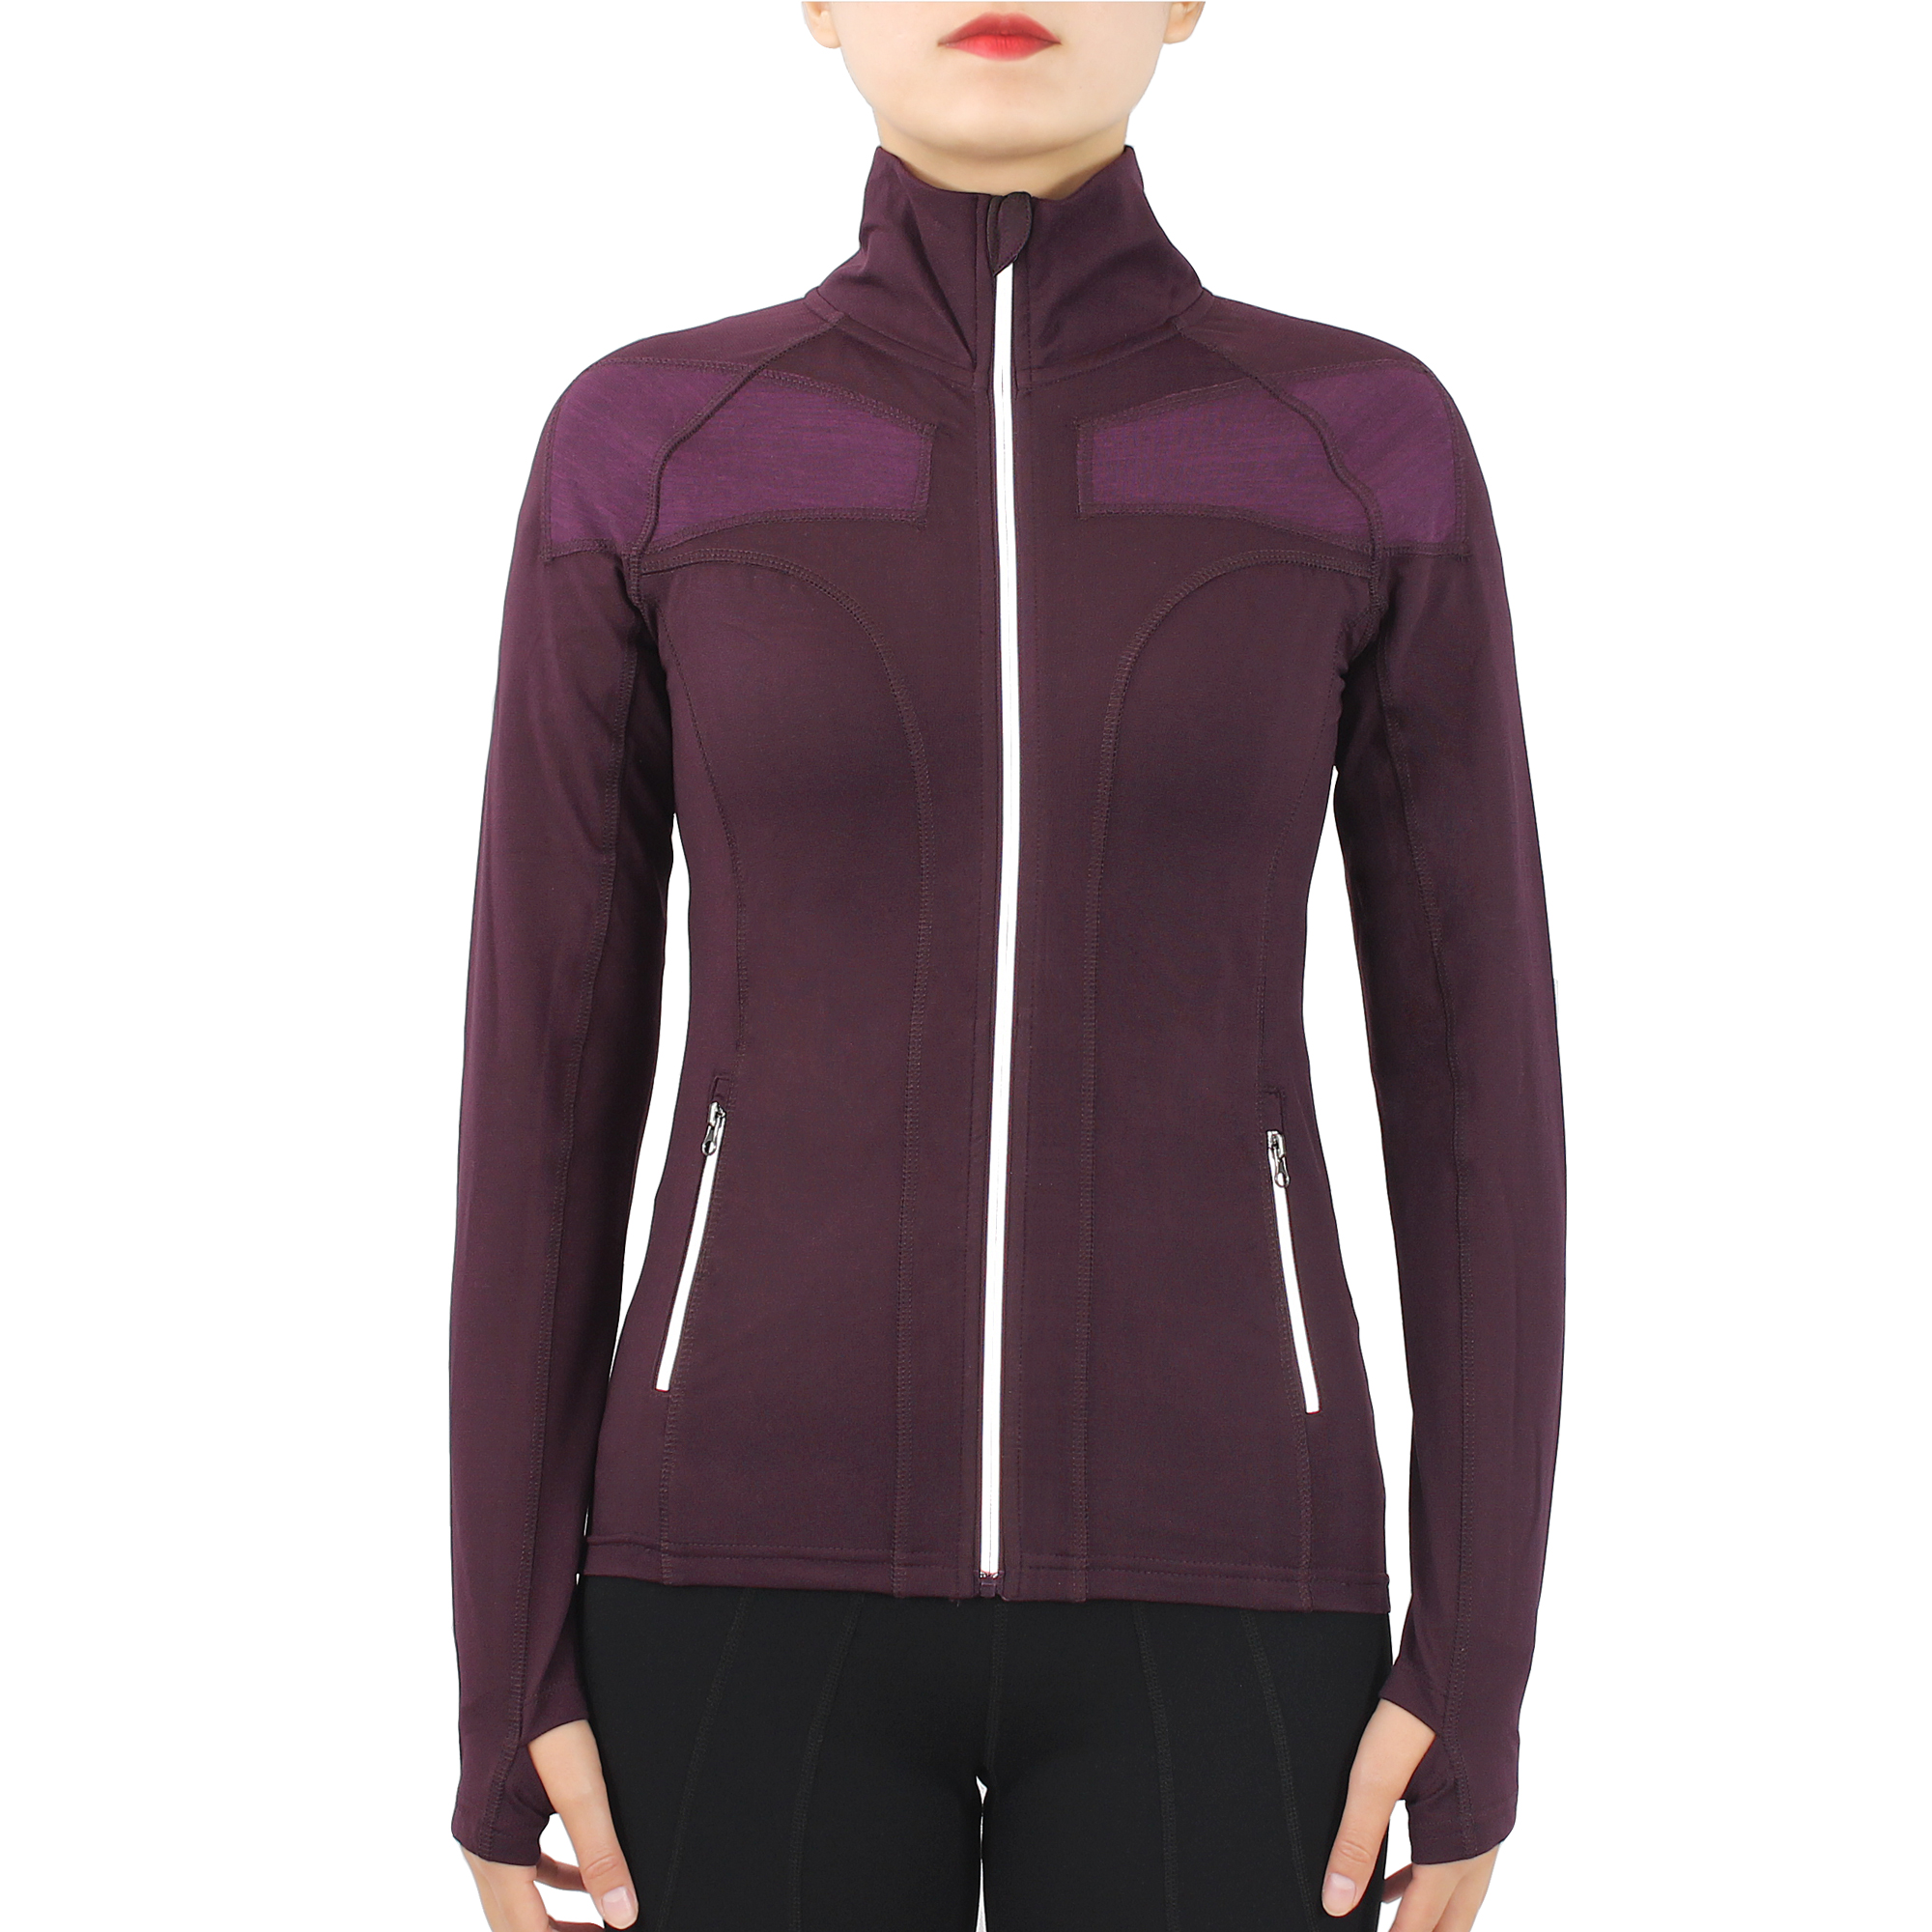 Women's Running Define Jacket, Slim Fit Athletic Soft Long Sleeves Reflective Zip Tops